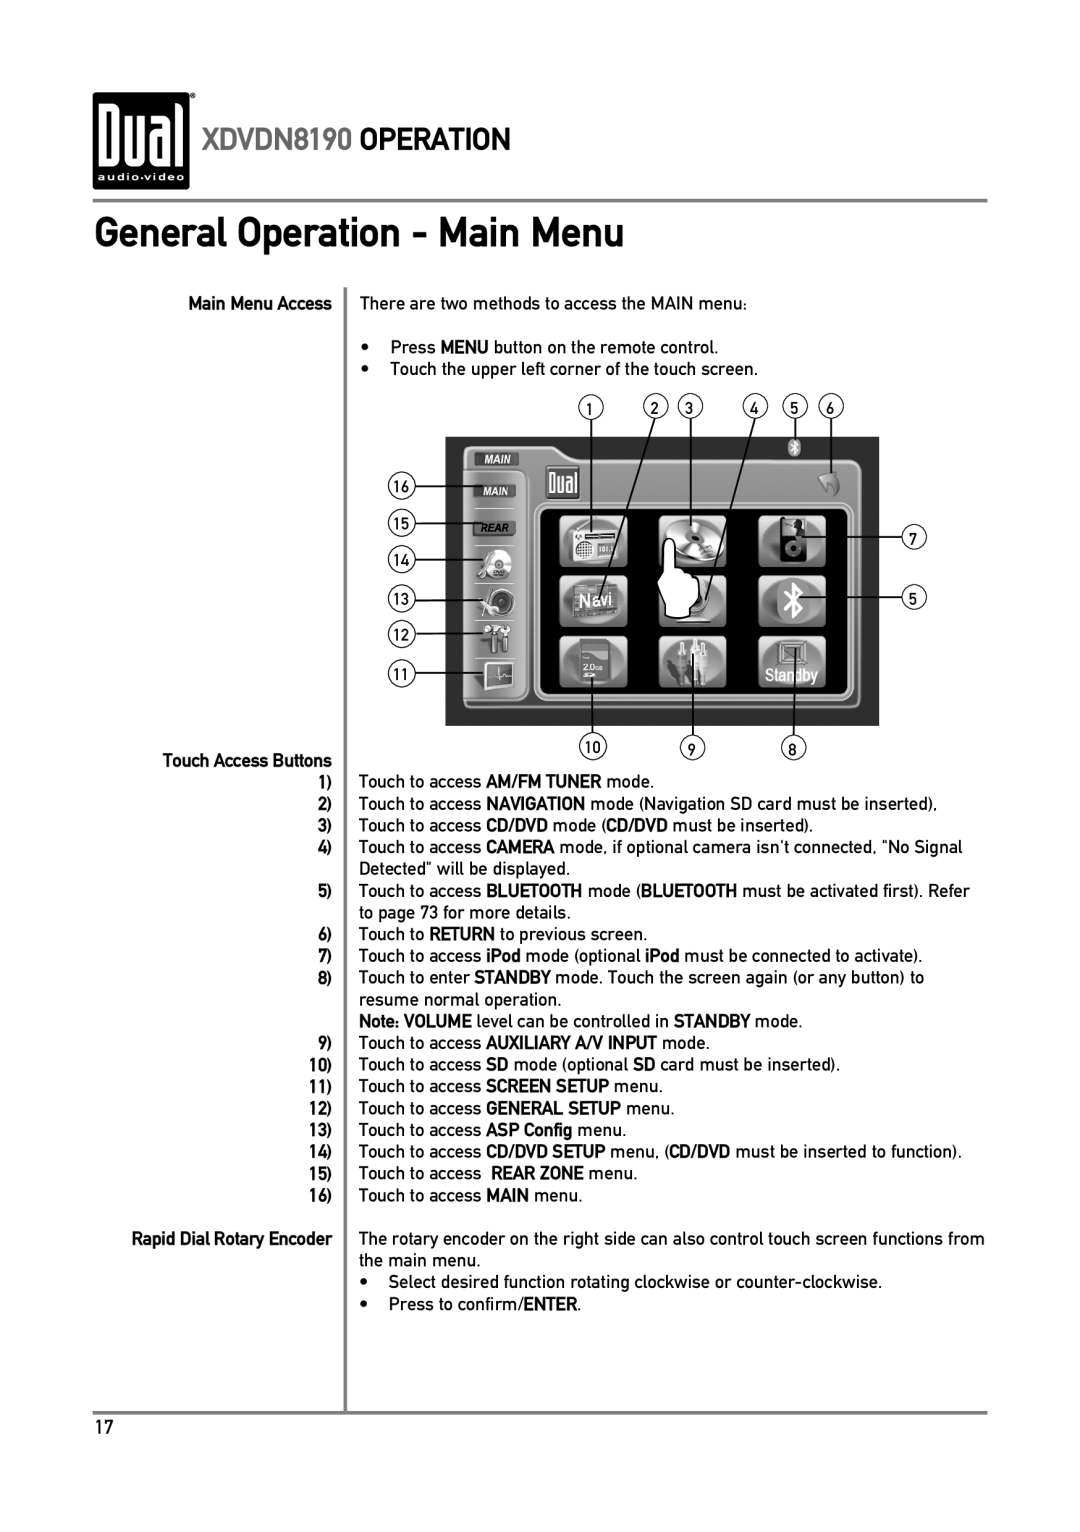 Dual owner manual General Operation - Main Menu, XDVDN8190 OPERATION, Main Menu Access, 5 6 7 8 9 10 11 12 13 14 15 16 